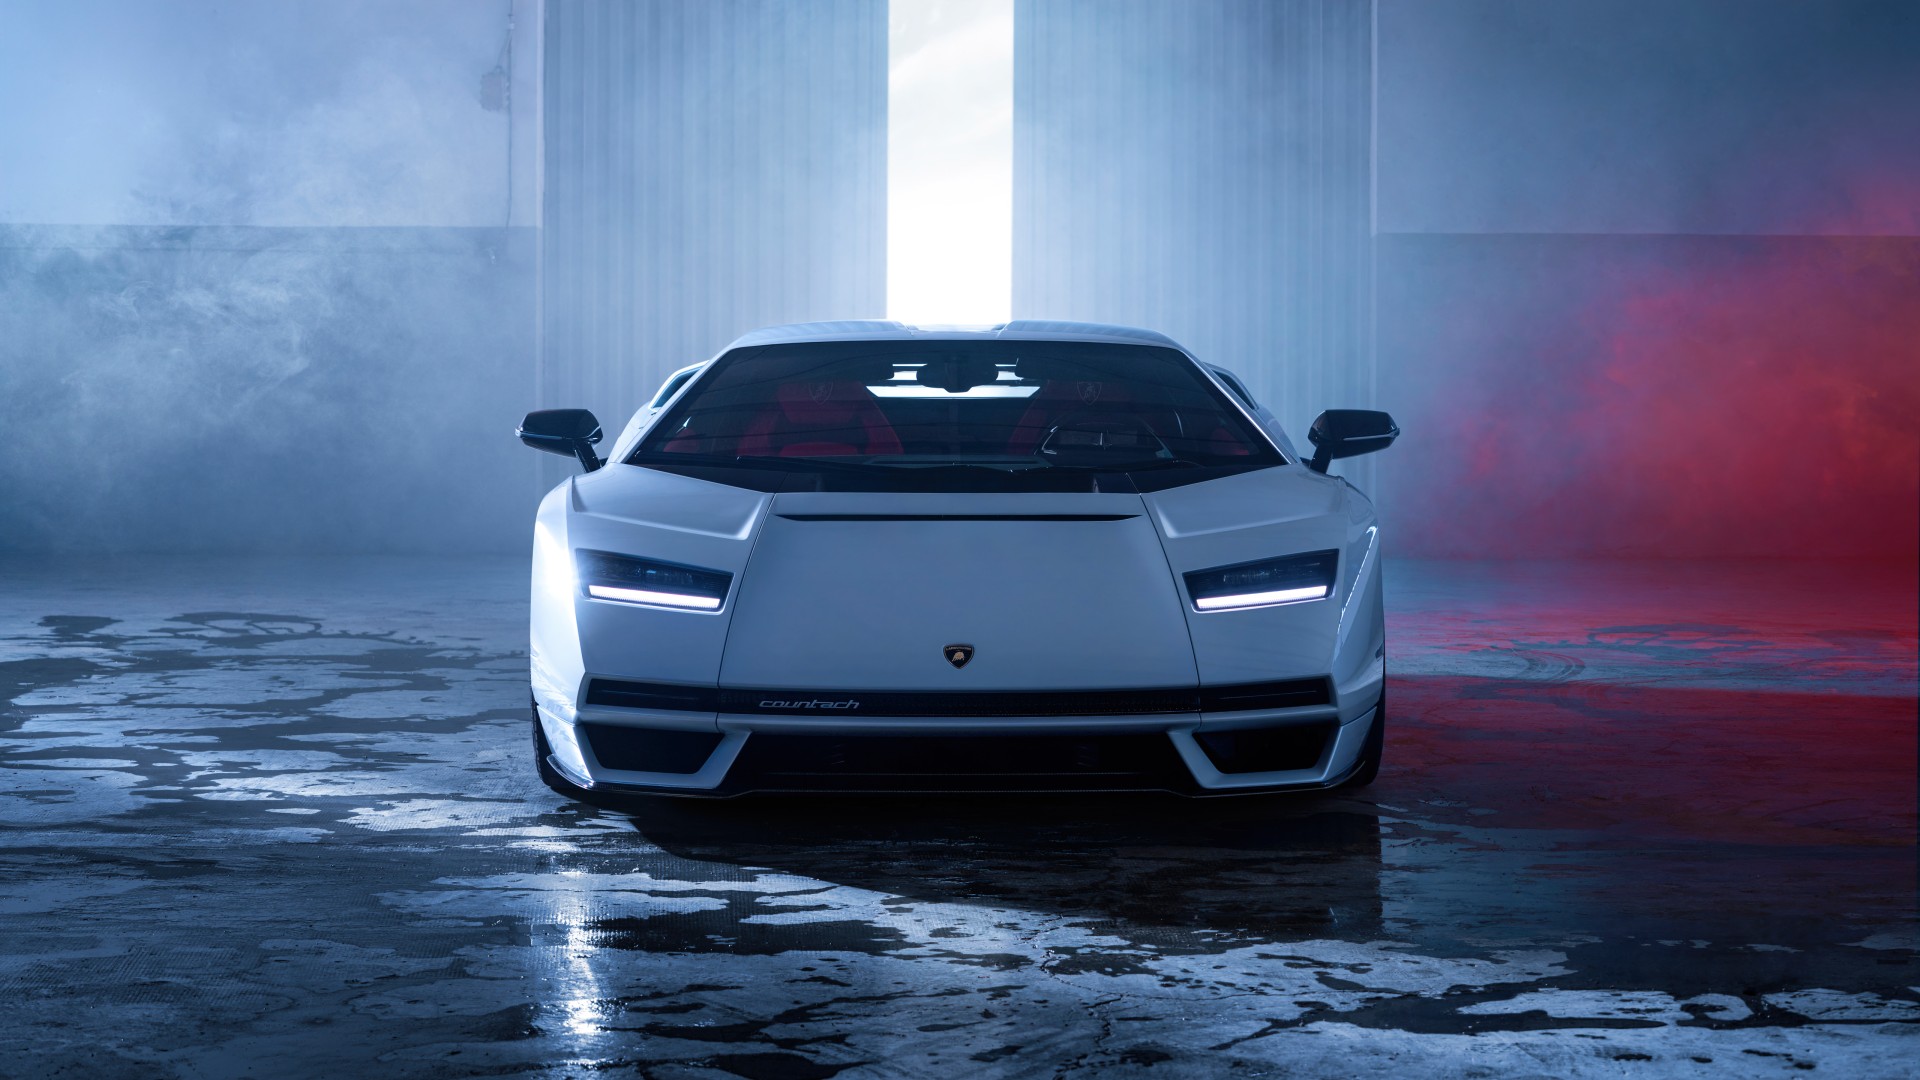 2022 Lamborghini Countach LPI 800-4 5K Wallpaper | HD Car Wallpapers